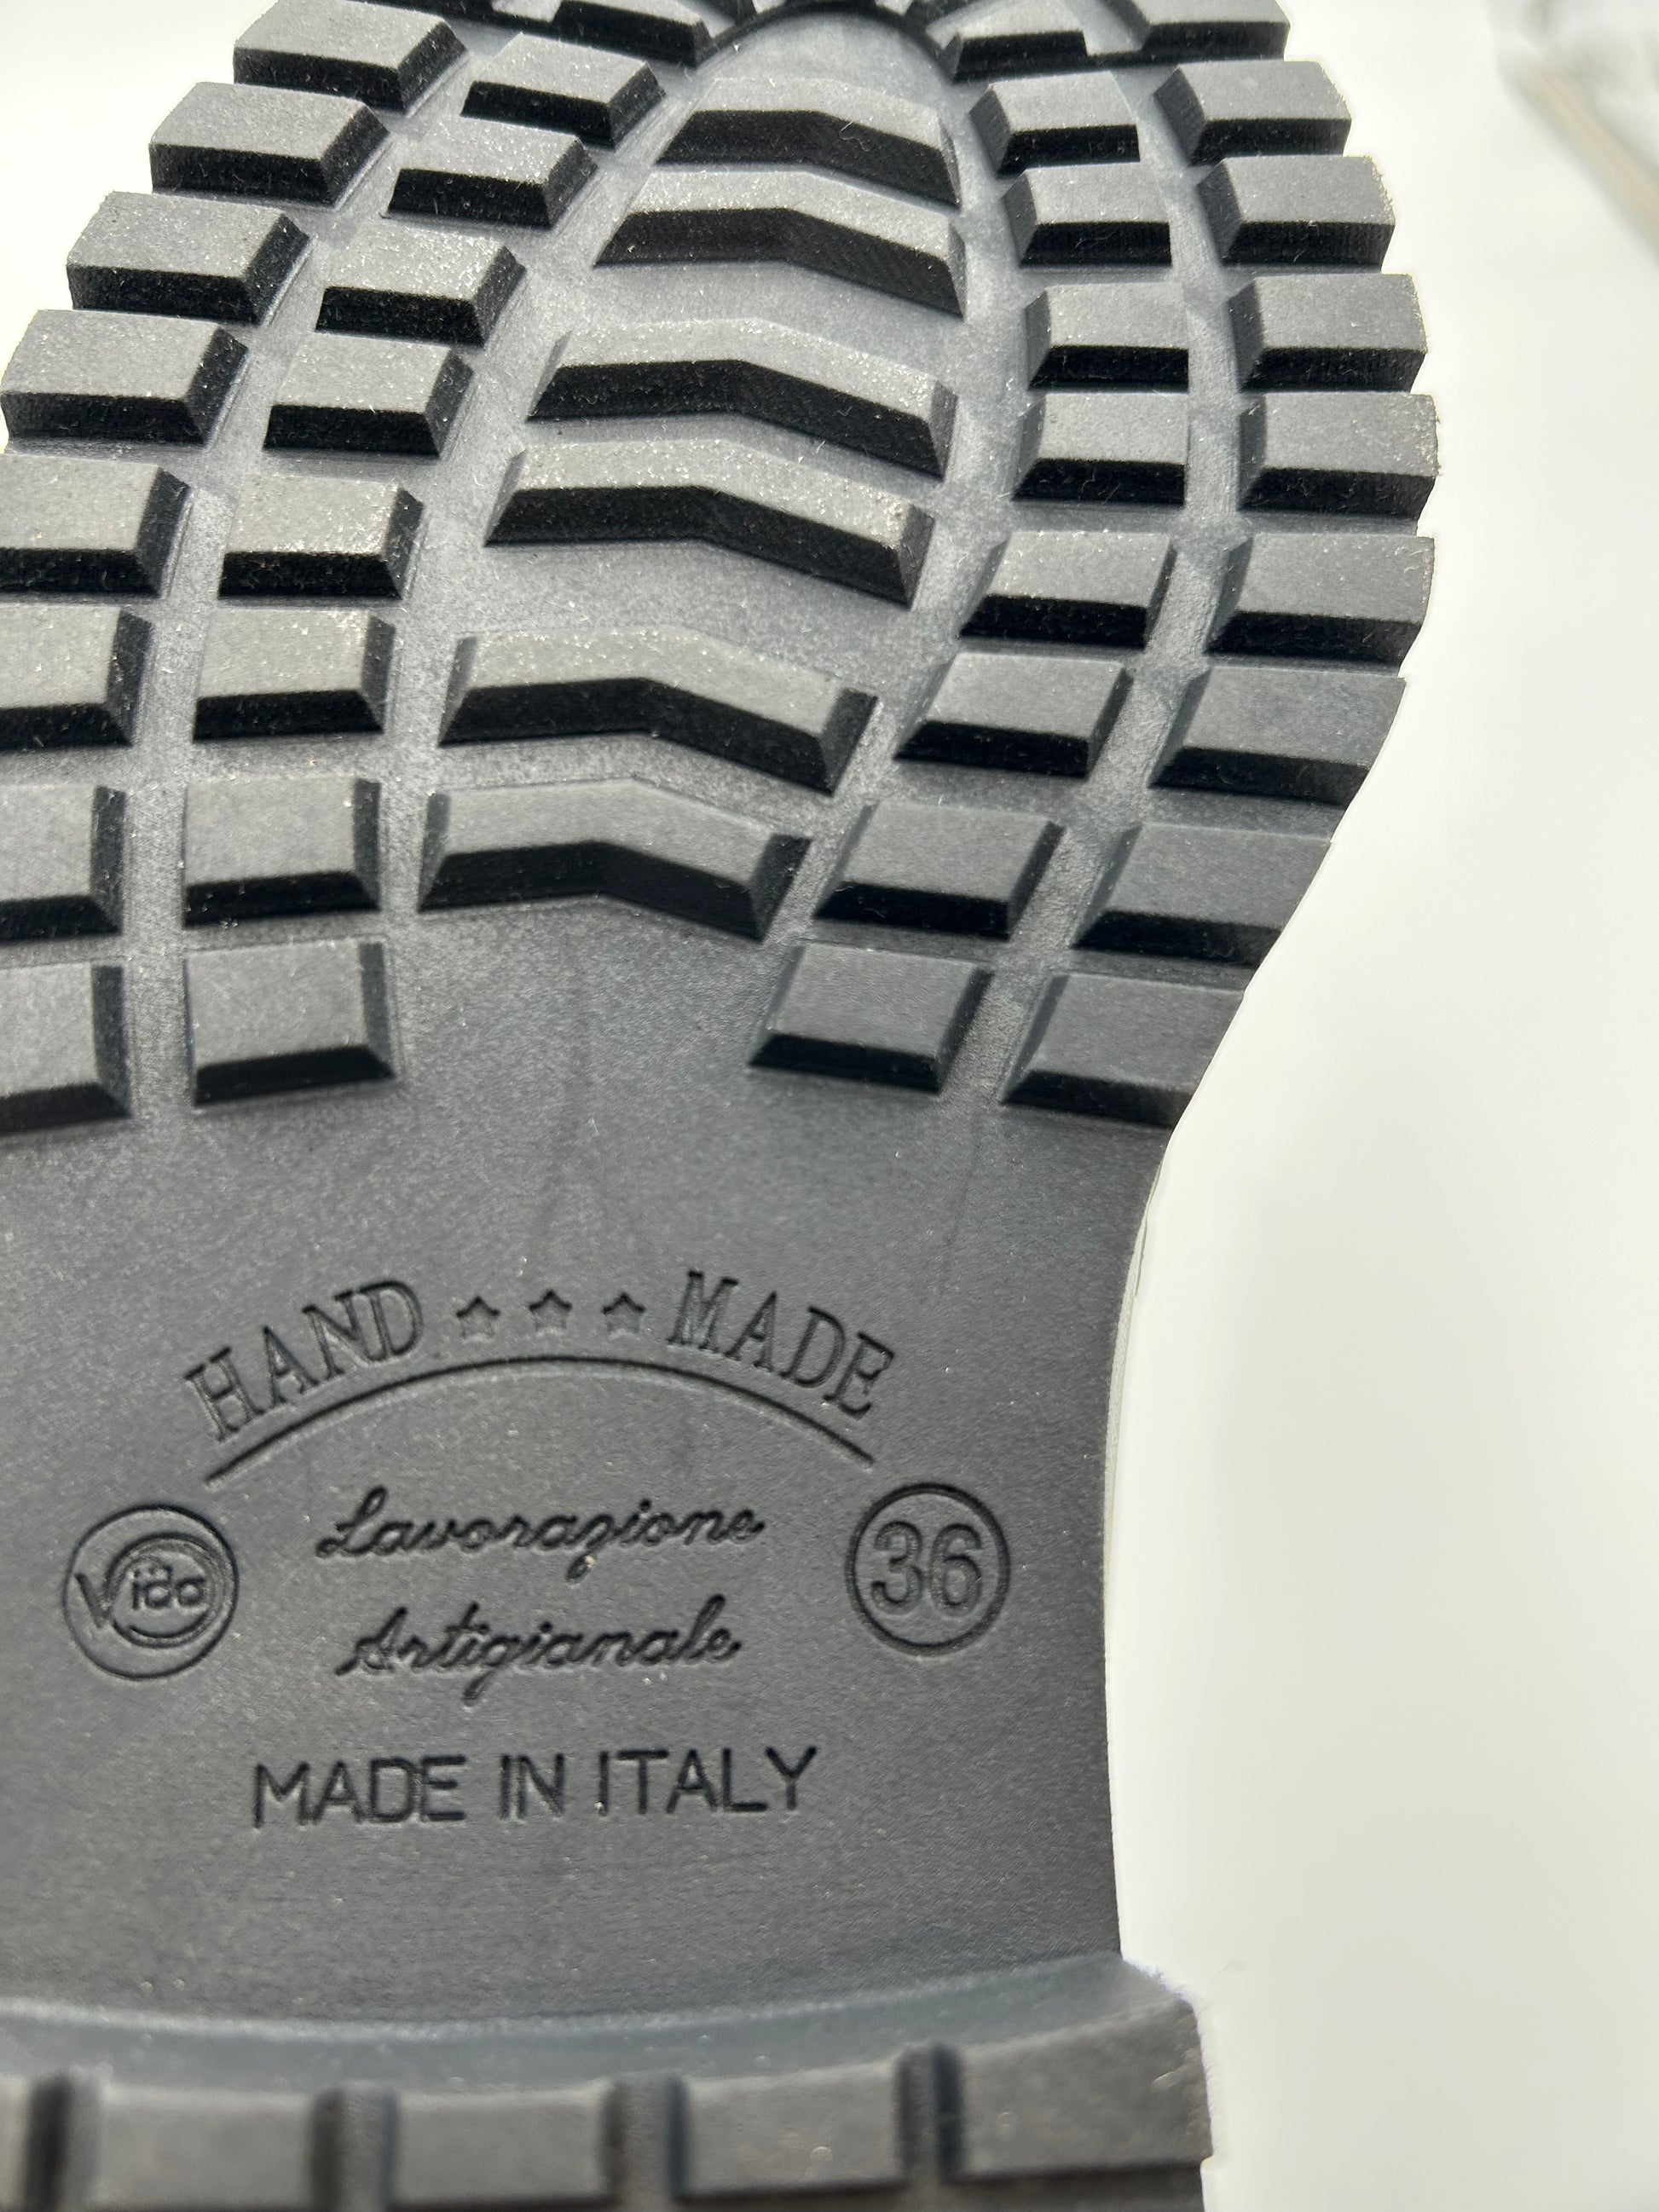 Made in italy Mocassino in pelle con gancetto - nero - Made in Italy